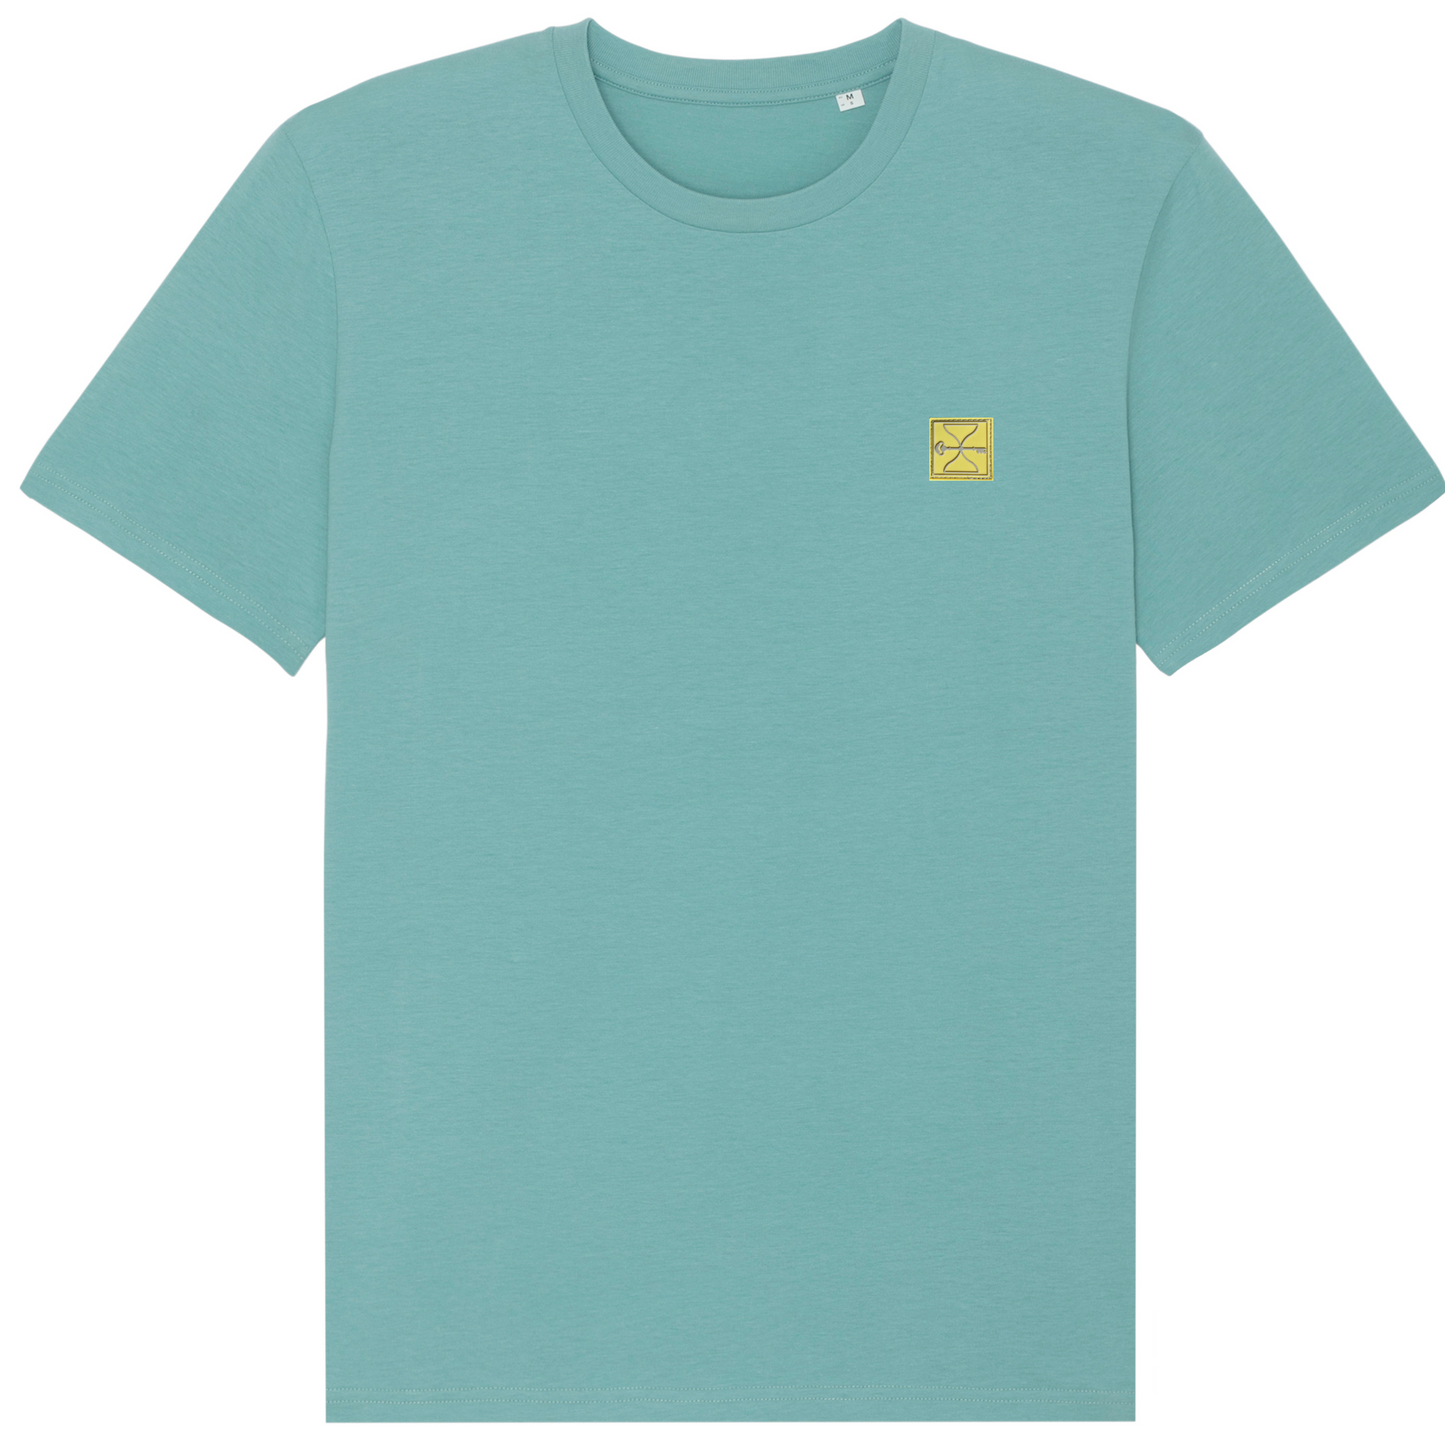 Teal Hourglass T-Shirt (Yellow Badge)